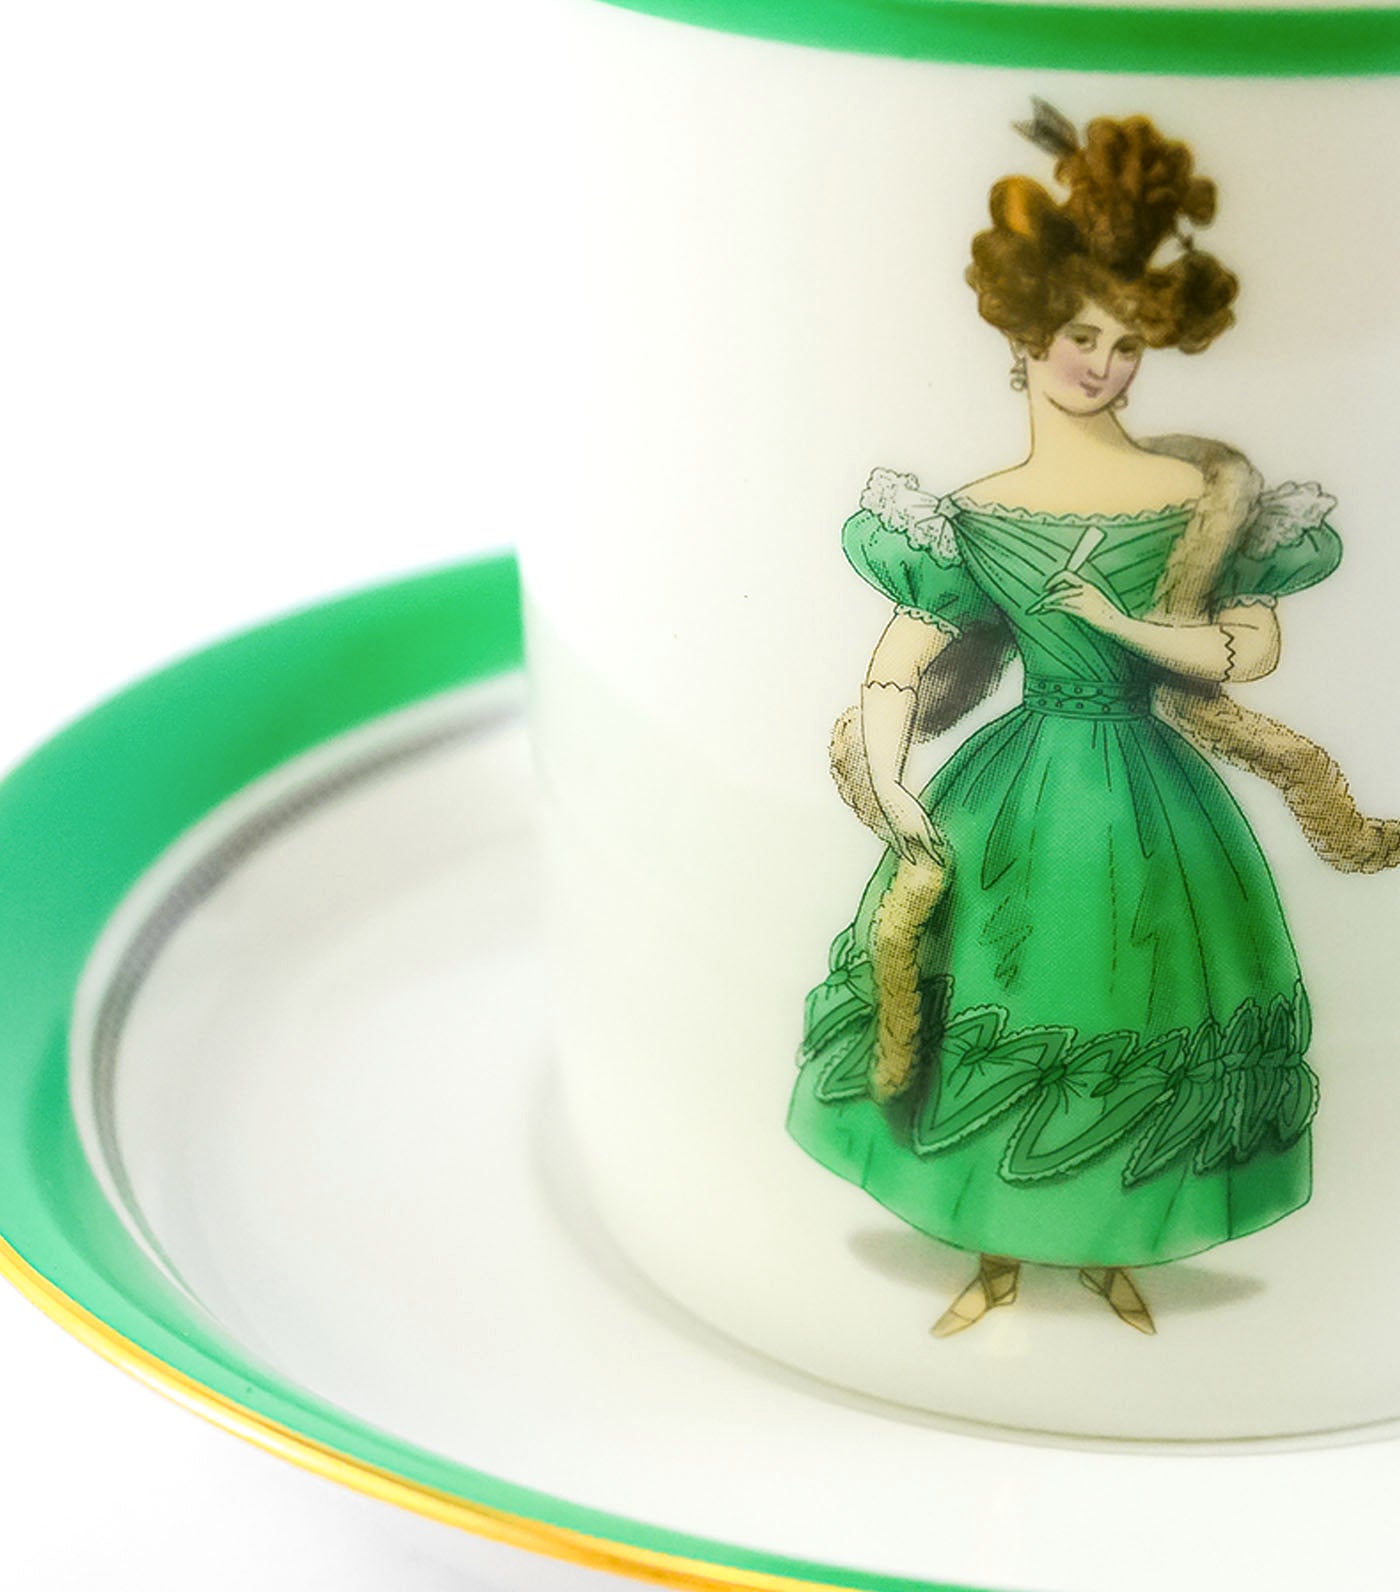 imperial porcelain modes de paris 1830 teacup and saucer heraldic